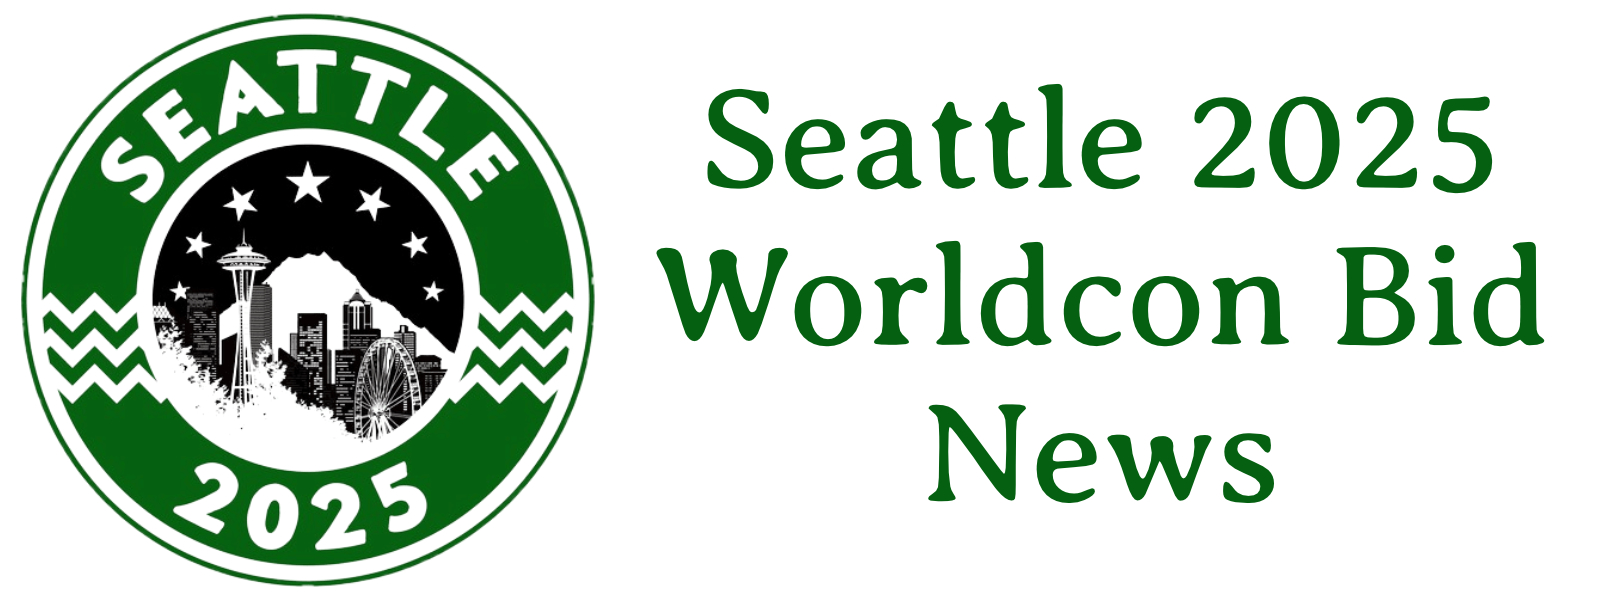 Seattle 2025 Worldcon Bid News